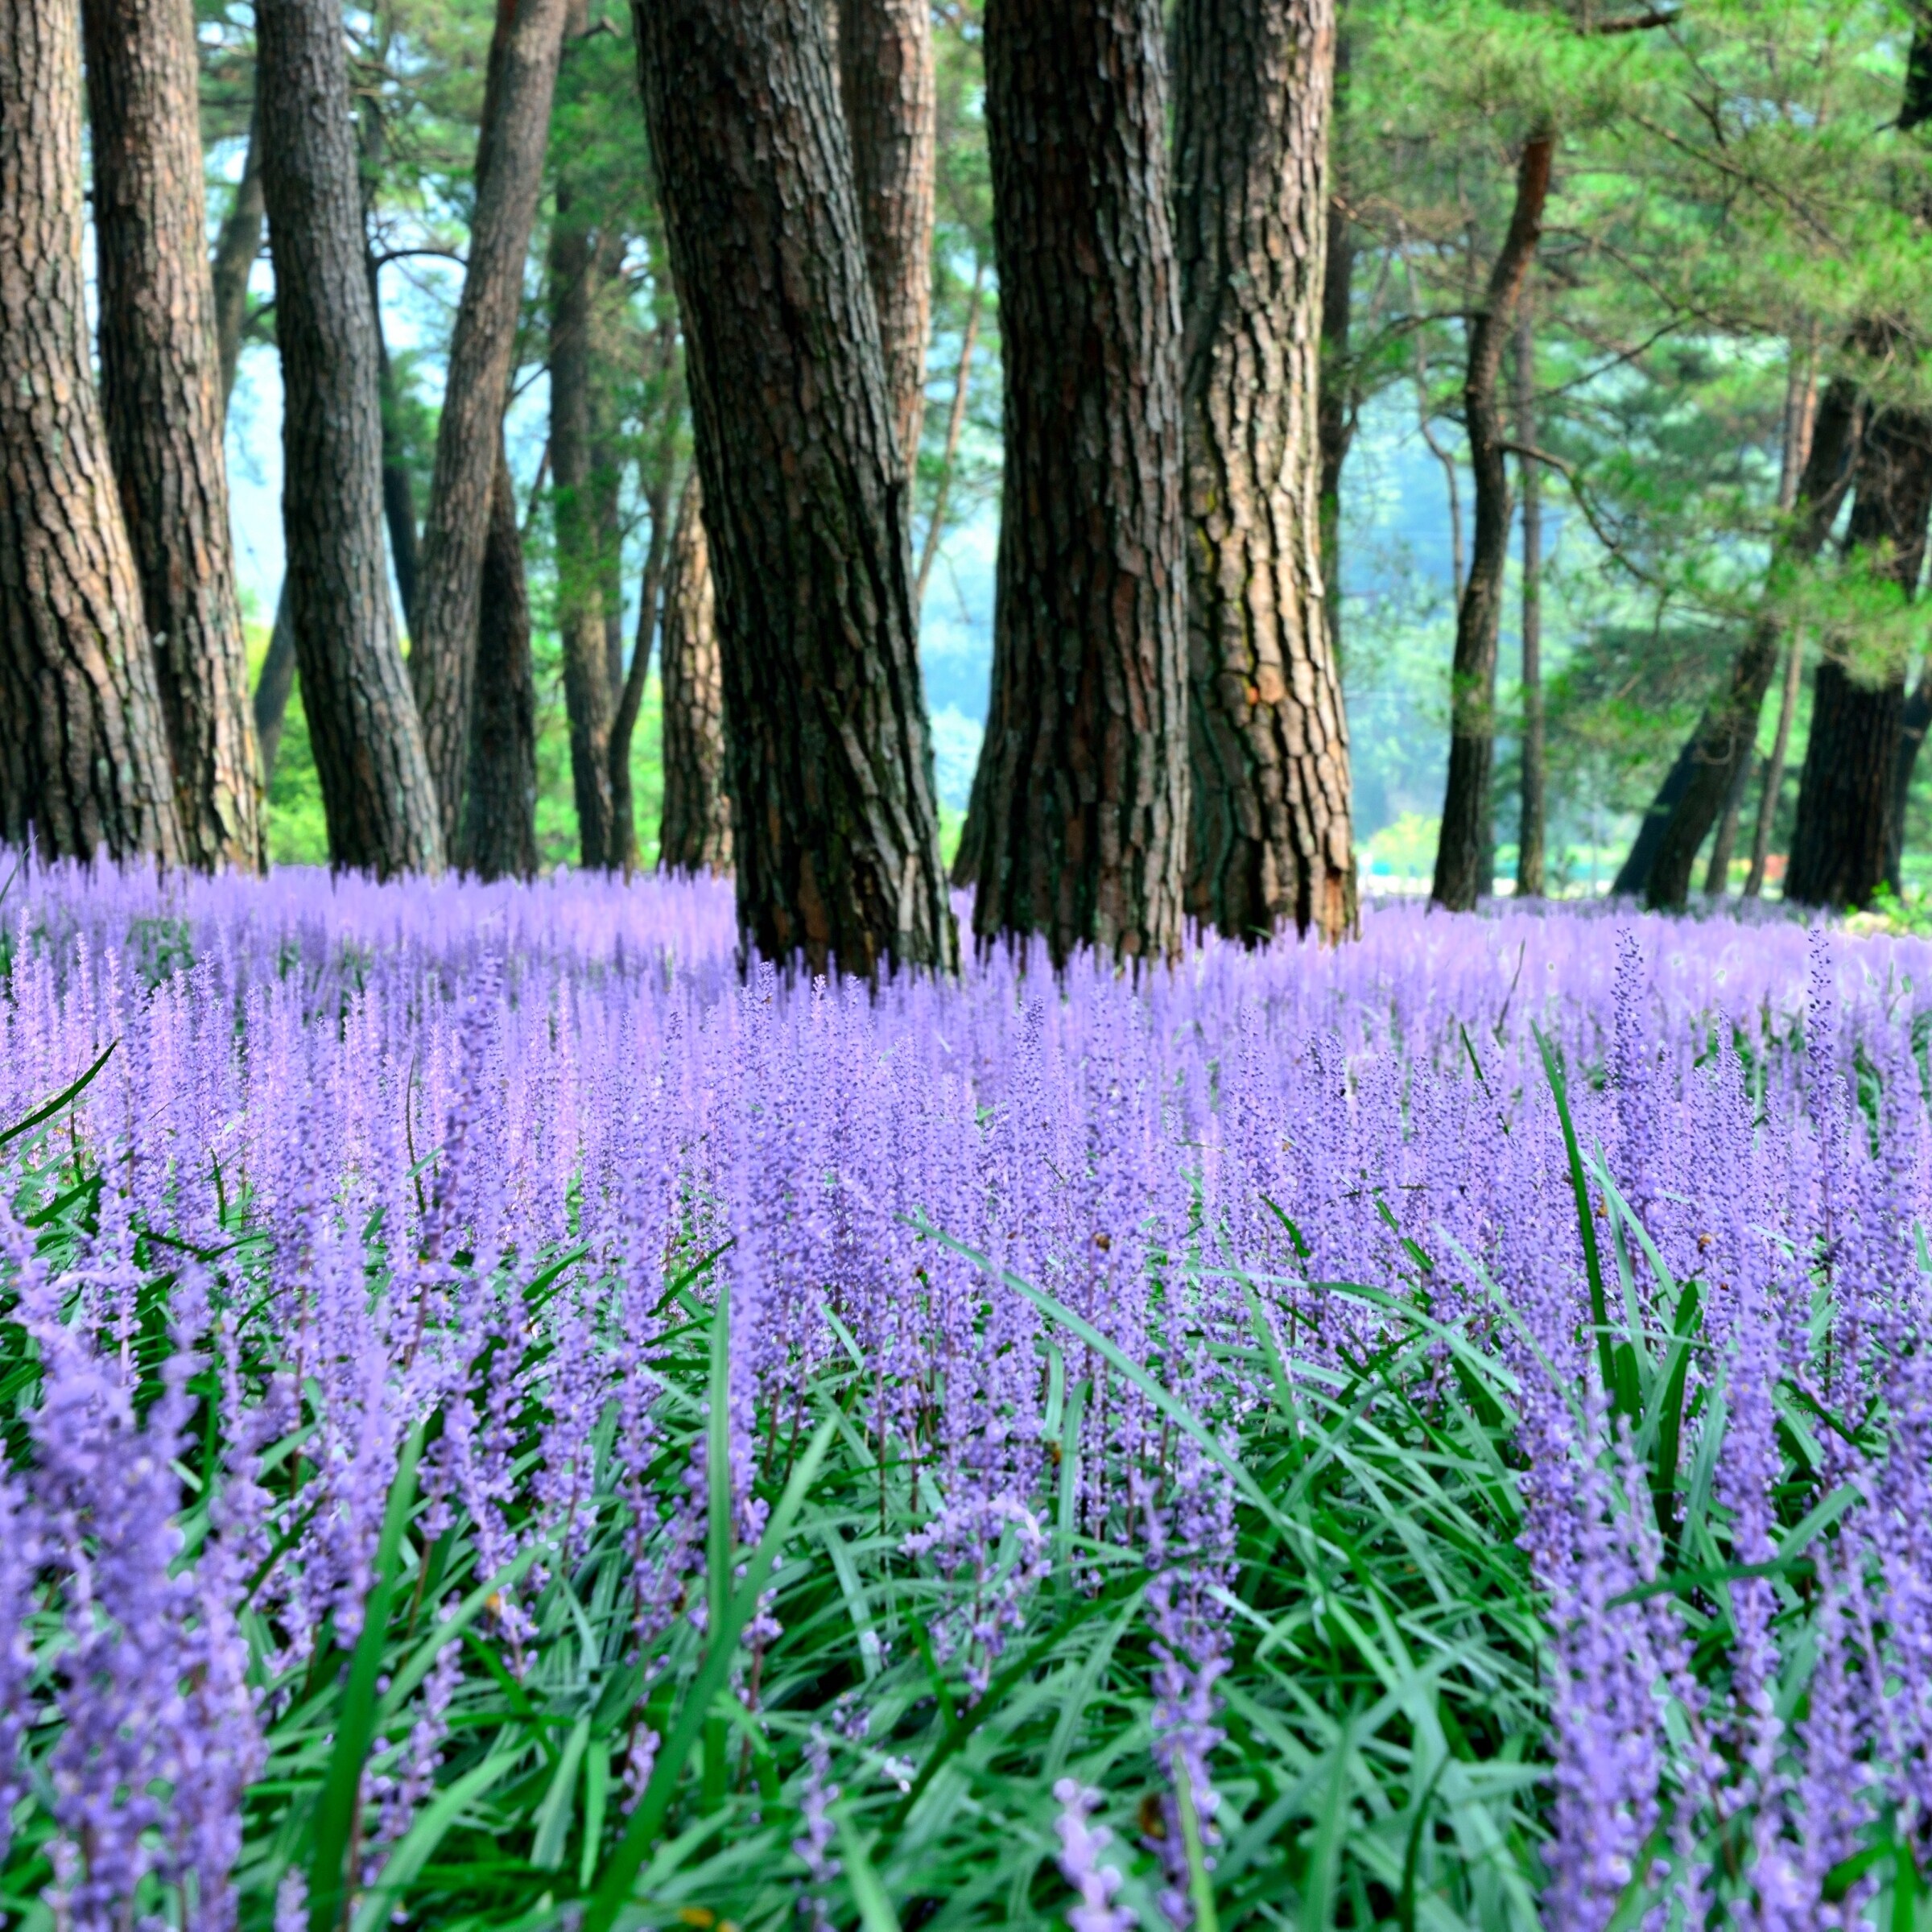 Liriope Muscari 'Royal Purple' Monkey Grass/Lilyturf Deep Green Foliage with Deep Purple Flowers Clumping. 18 Plant Flat-3.5 Pots Pixies Gardens 